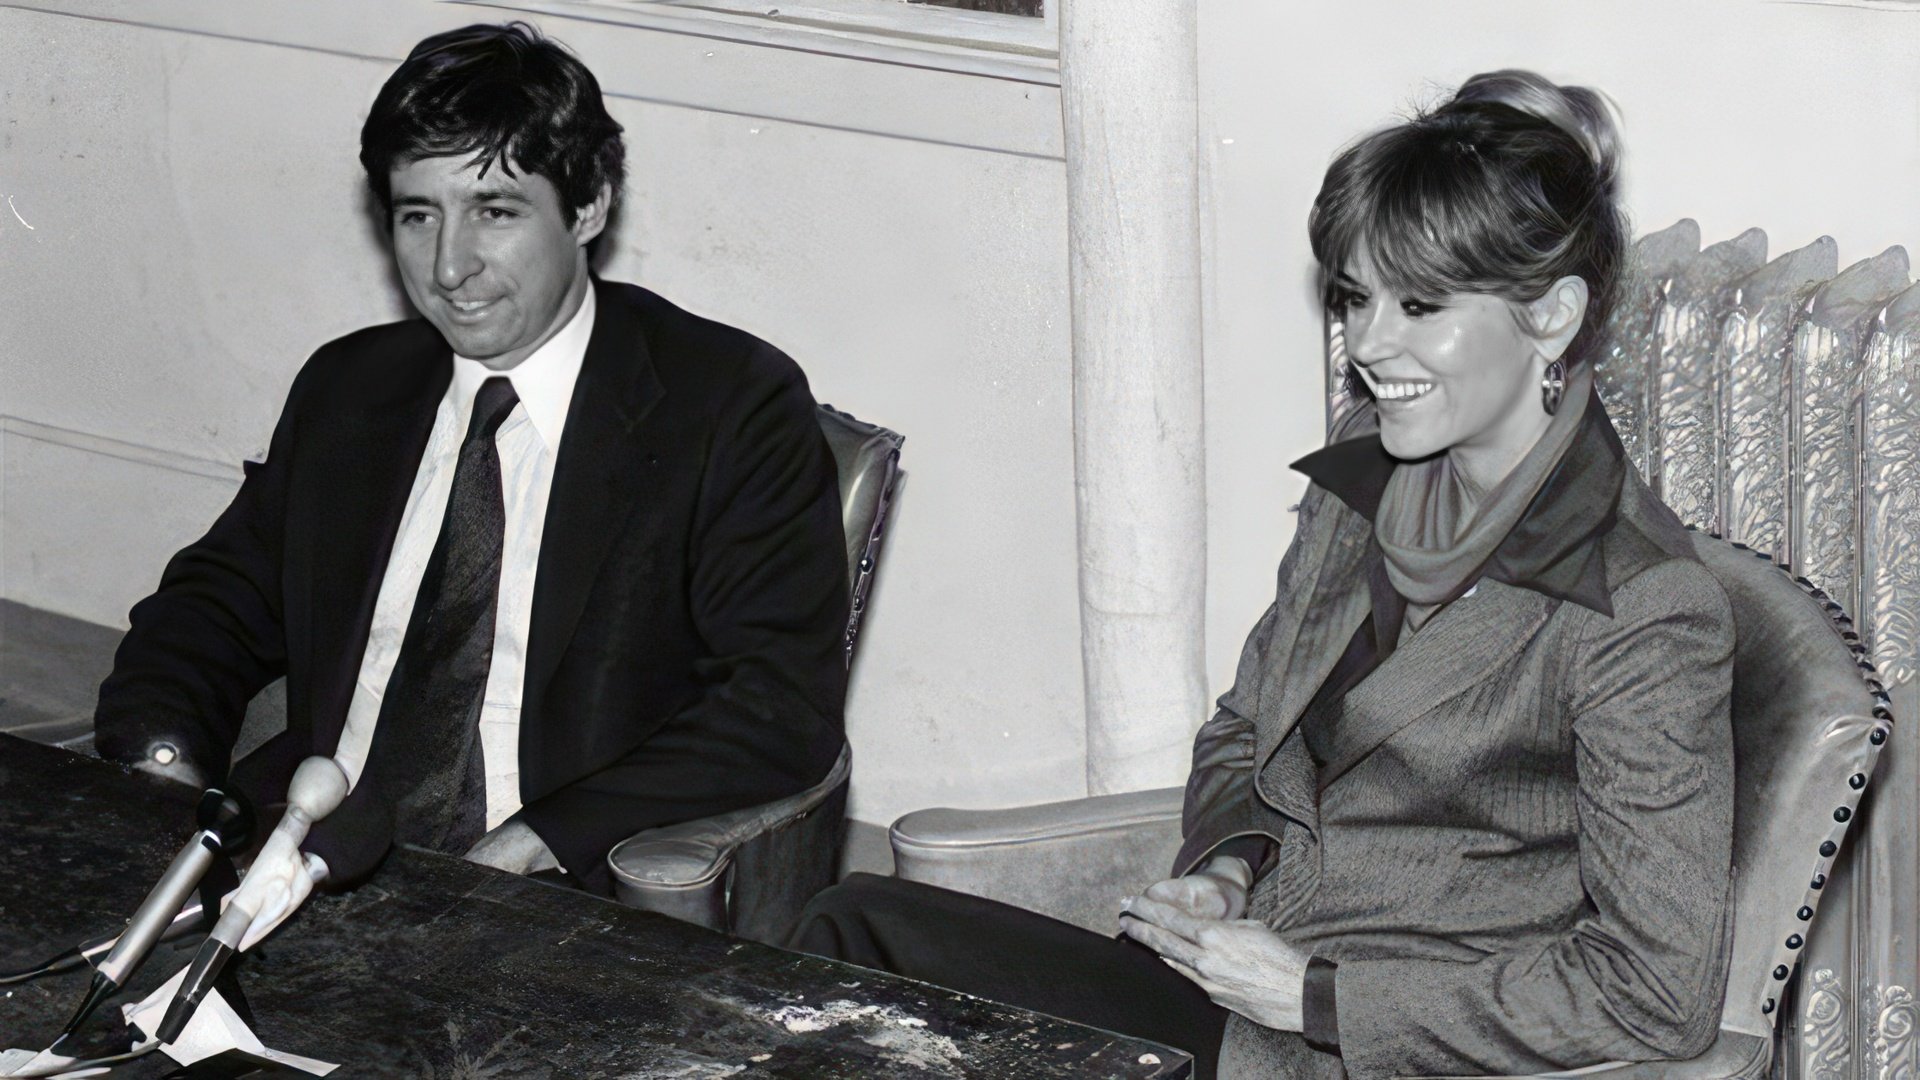 Jane Fonda and her second husband Tom Hayden